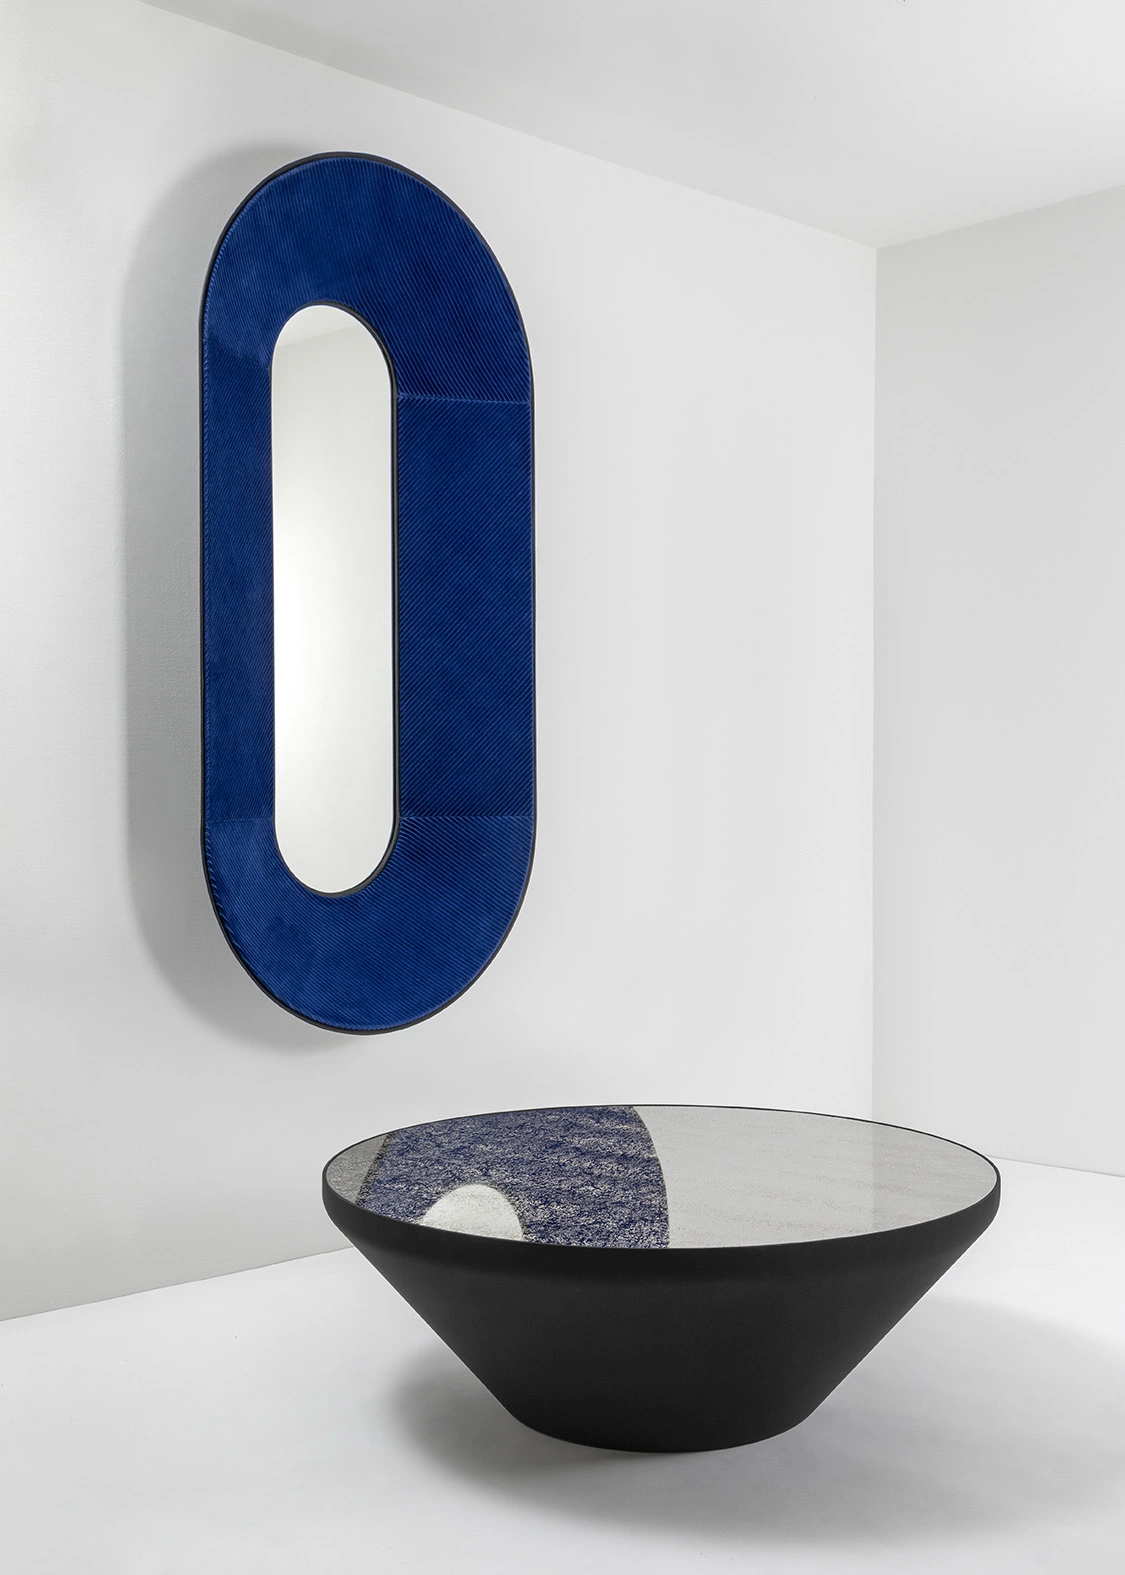 Apollo mirror - Jean-Baptiste Fastrez - Mirror - Galerie kreo